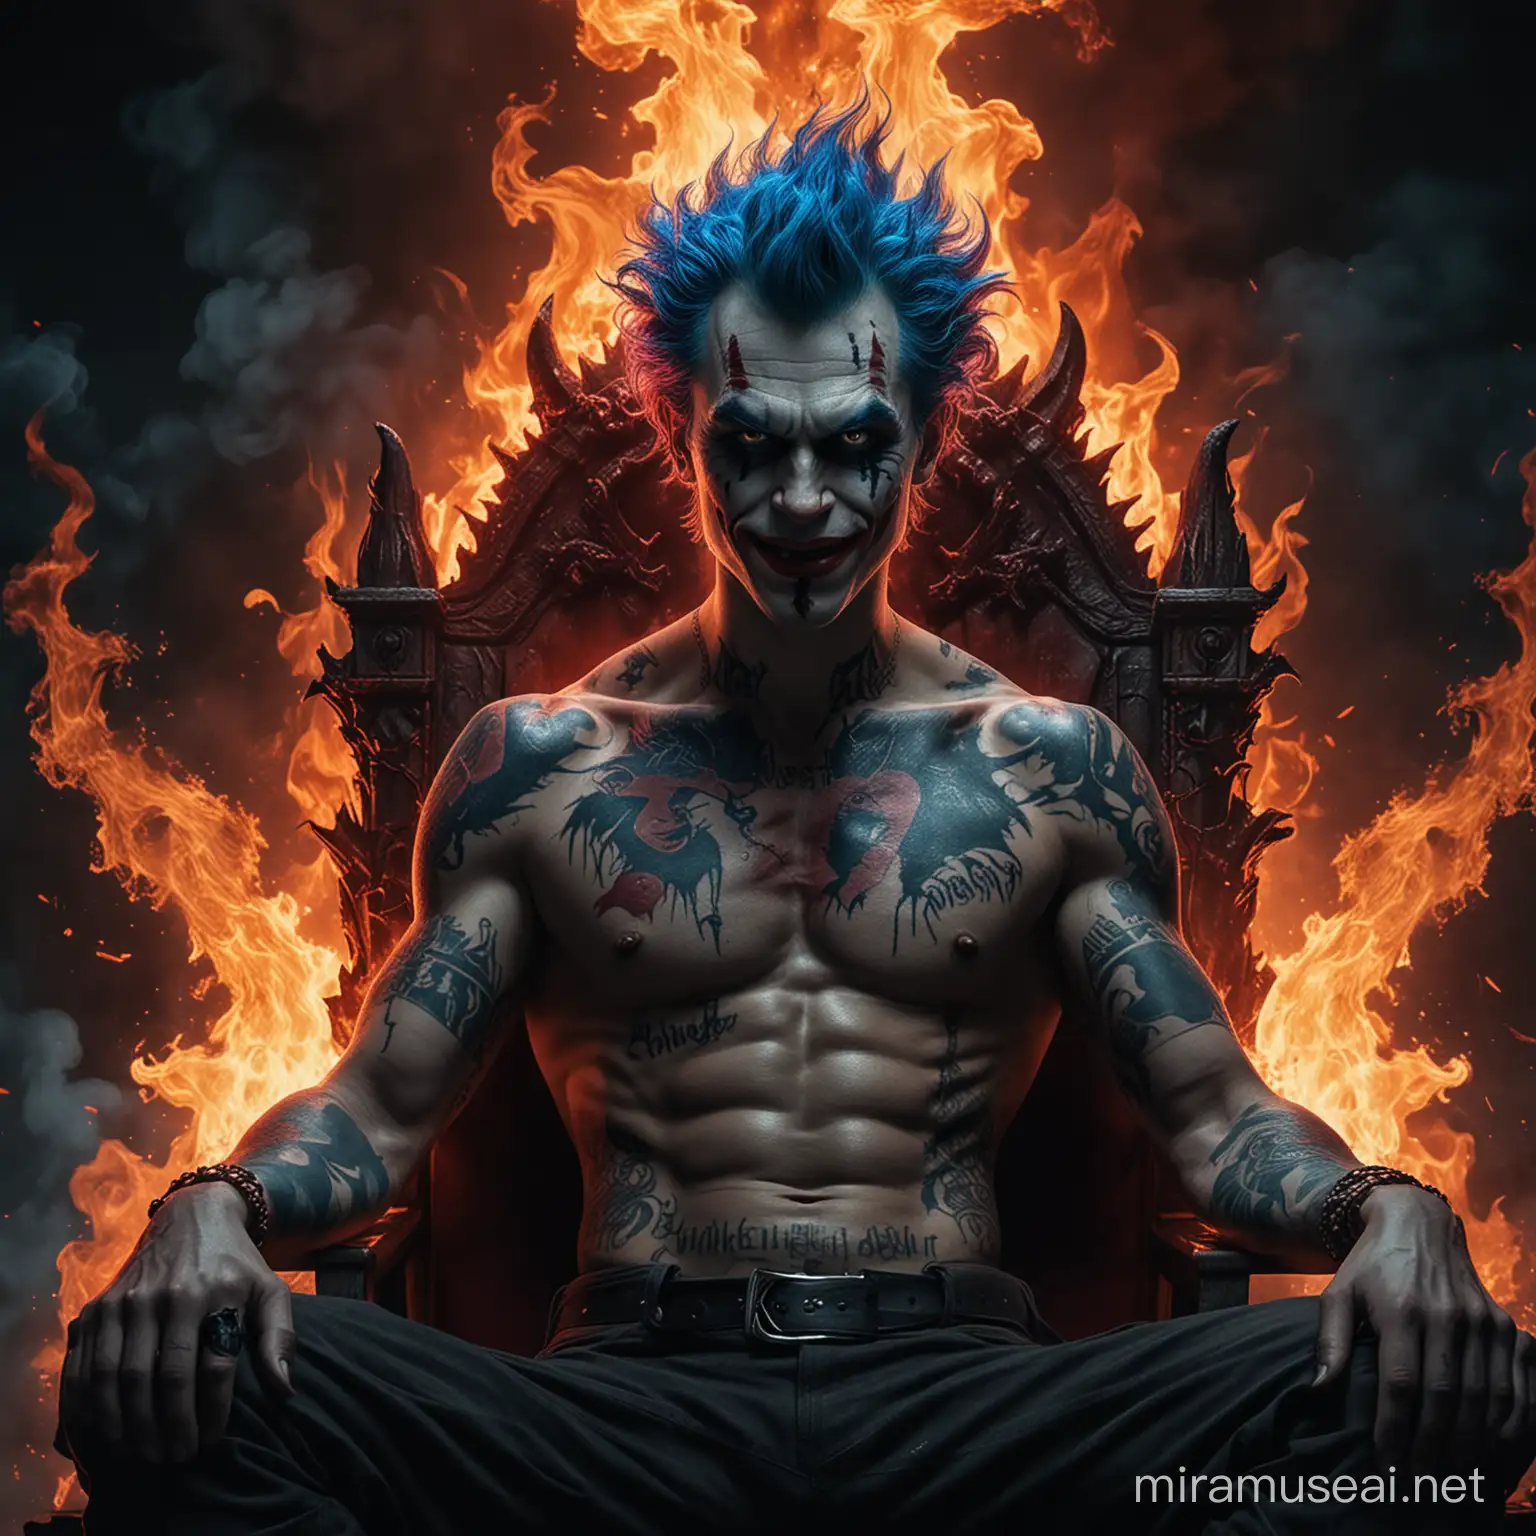 Photoshop realistic sinematic Joker  bertato naga merah,biru membara,berkobar,bergelora,asap membara duduk di singgasana iblis di neraka v4 berwarna realistis, api merah,biru membara dimana-mana.